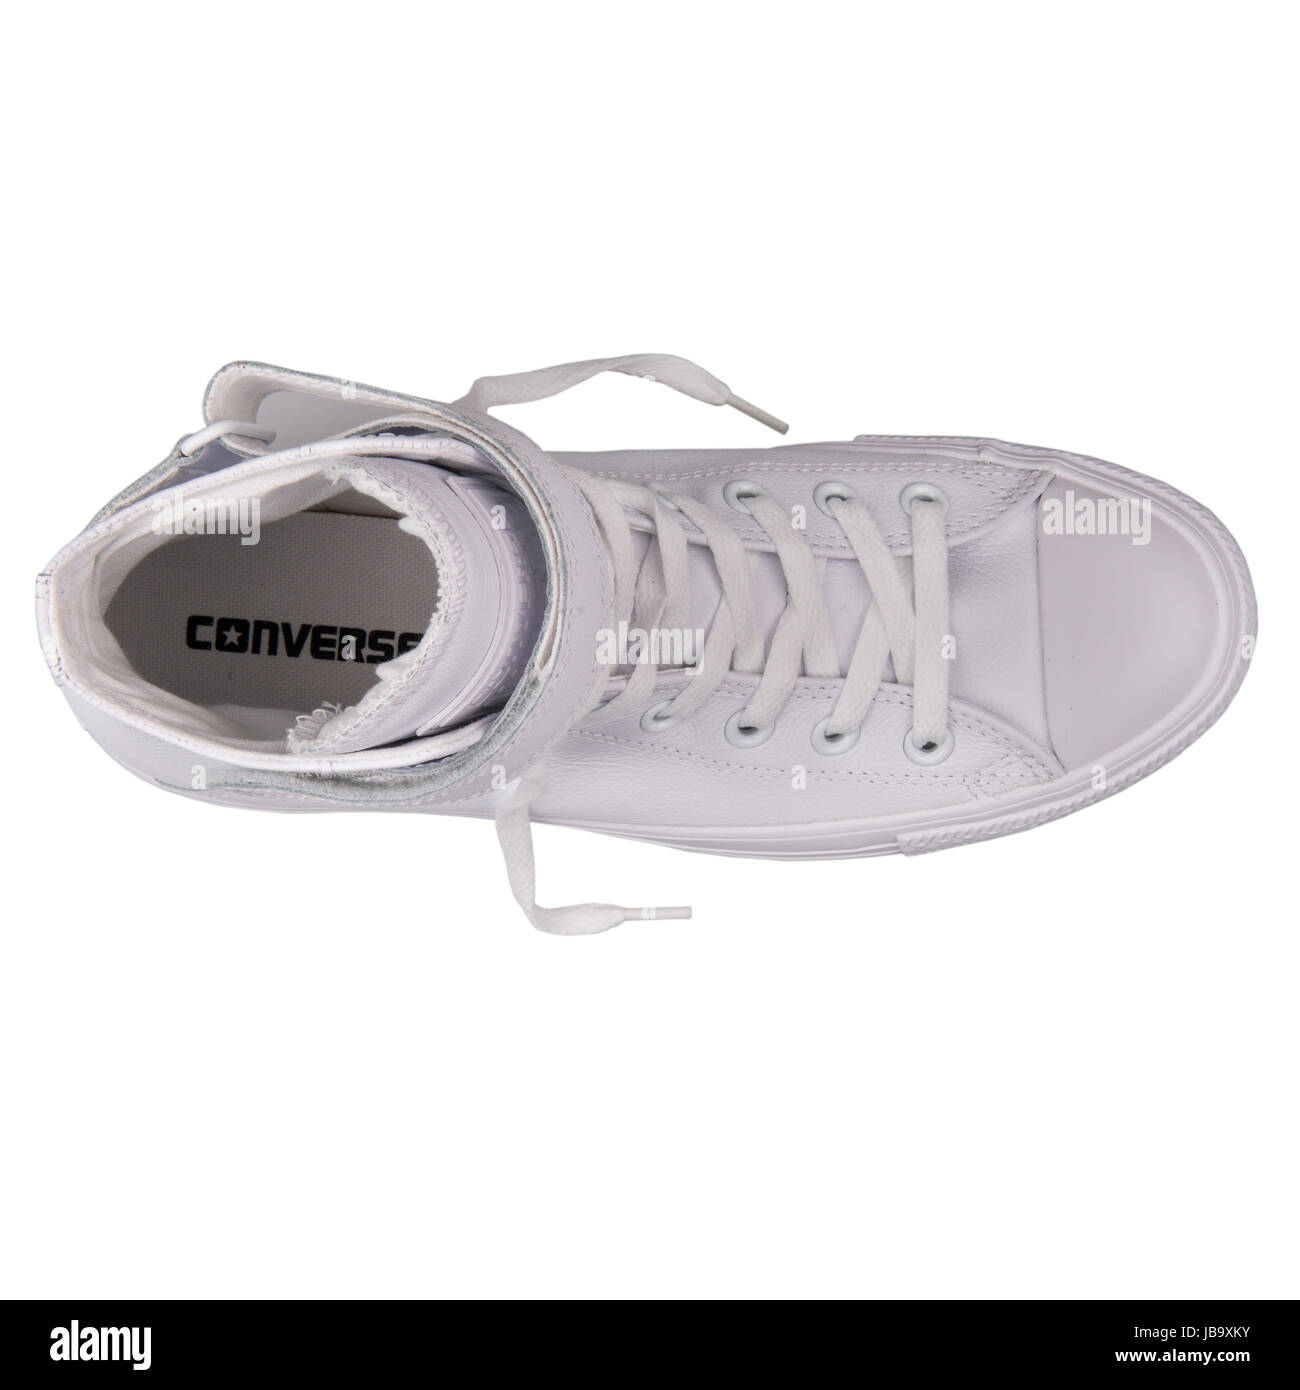 Converse Chuck Taylor All Star Hi Brea Chaussures pour femmes en cuir blanc  - 549582C Photo Stock - Alamy